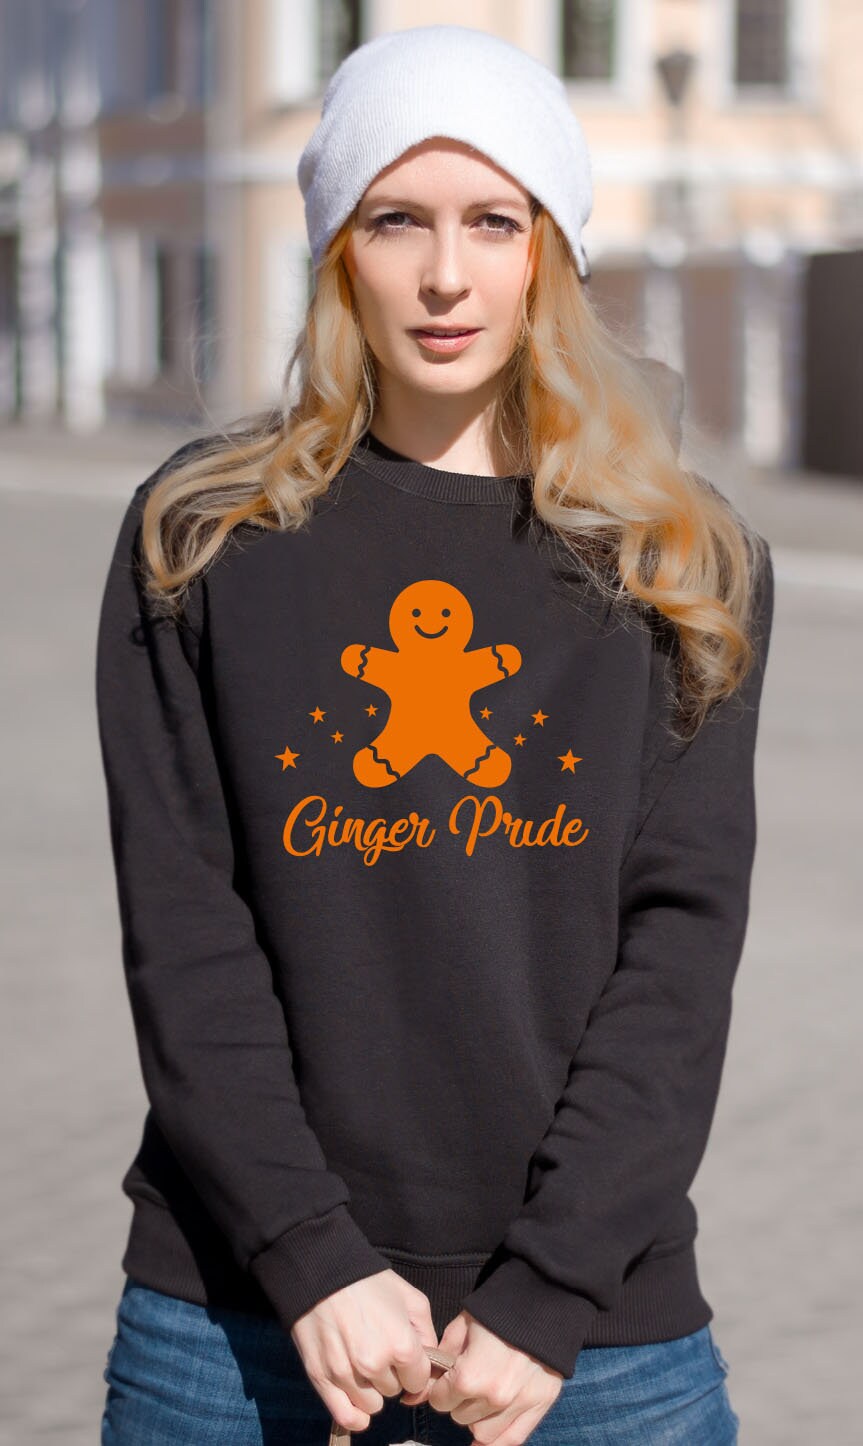 Gingergbread Man Ginger Pride Sweatshirt JH030 Funny Christmas Jumper Sweater Self Isolation Lockdown